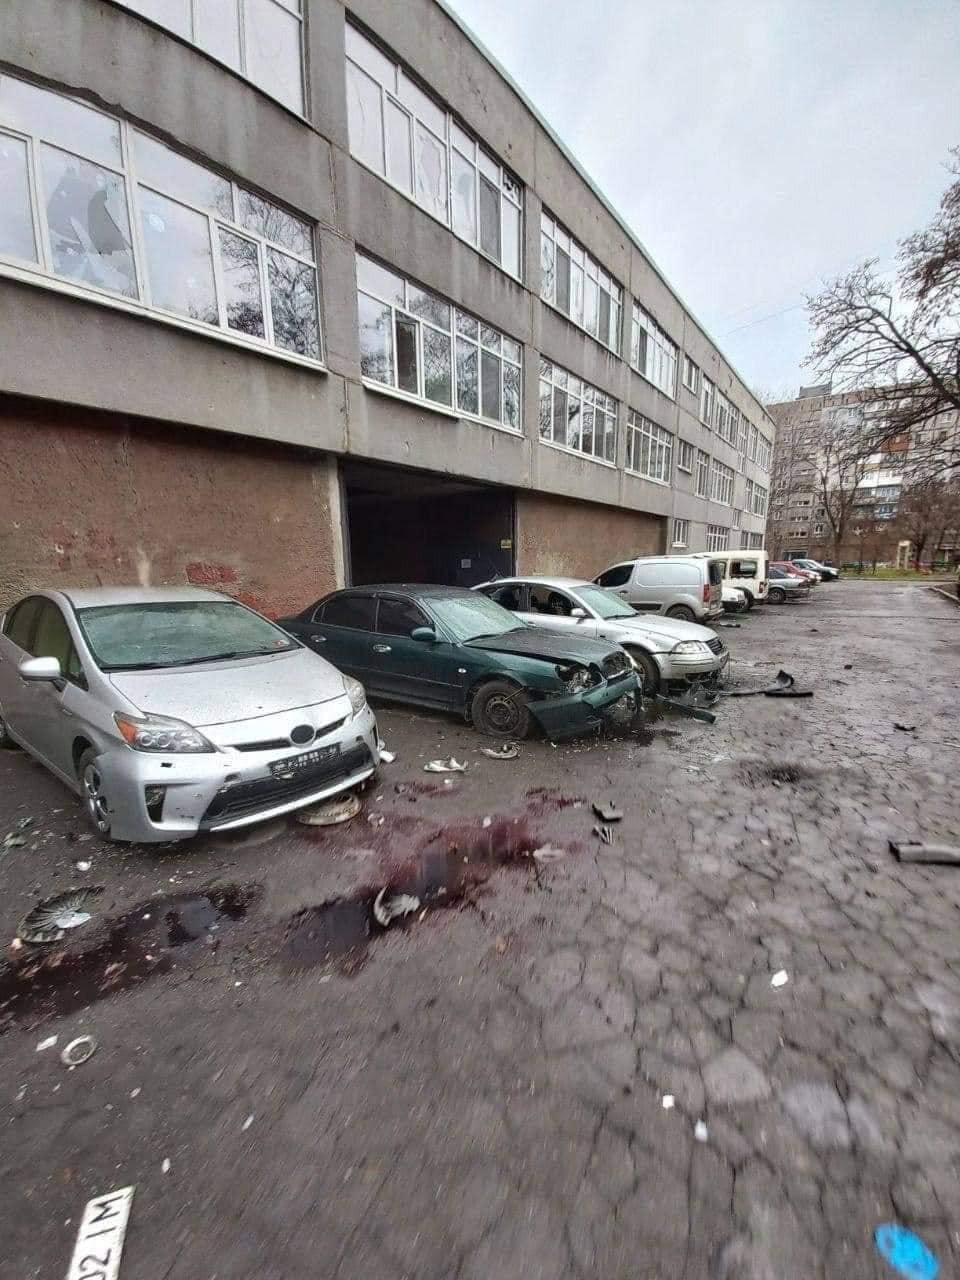 Carros destruídos durante ataque da Rússia em Mariupol  (Foto: Facebook/Маріупольська міська рада/Câmara Municipal de Mariupol)